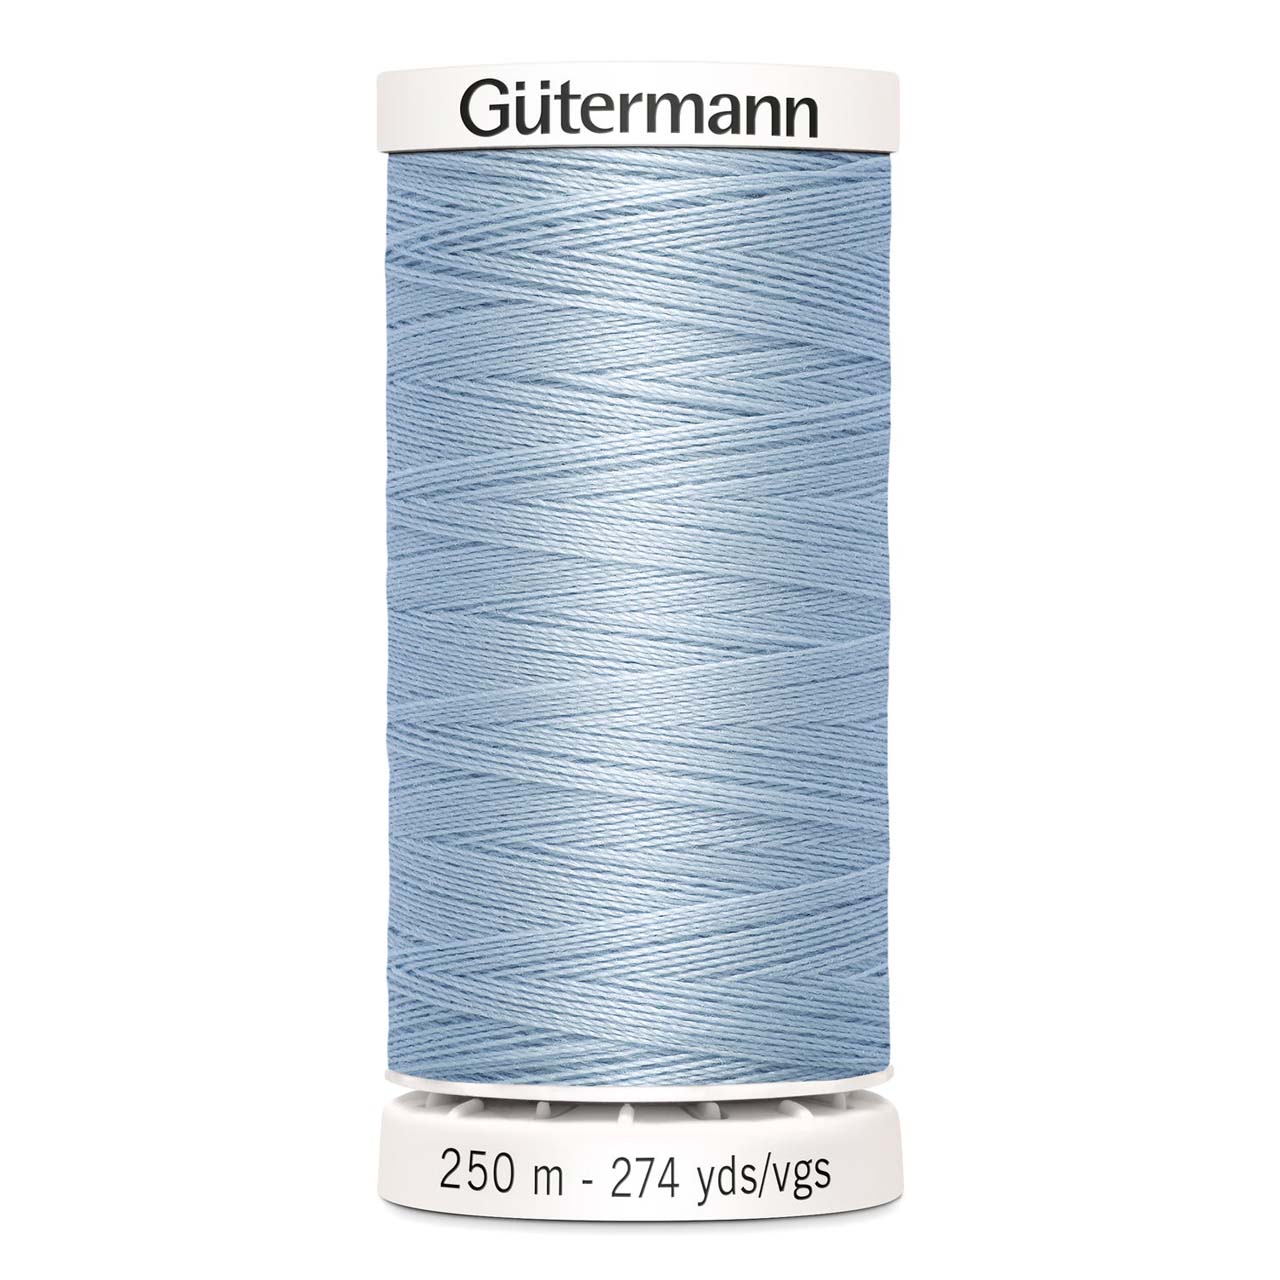 Gutermann thread 75 sewing thread 250 metres